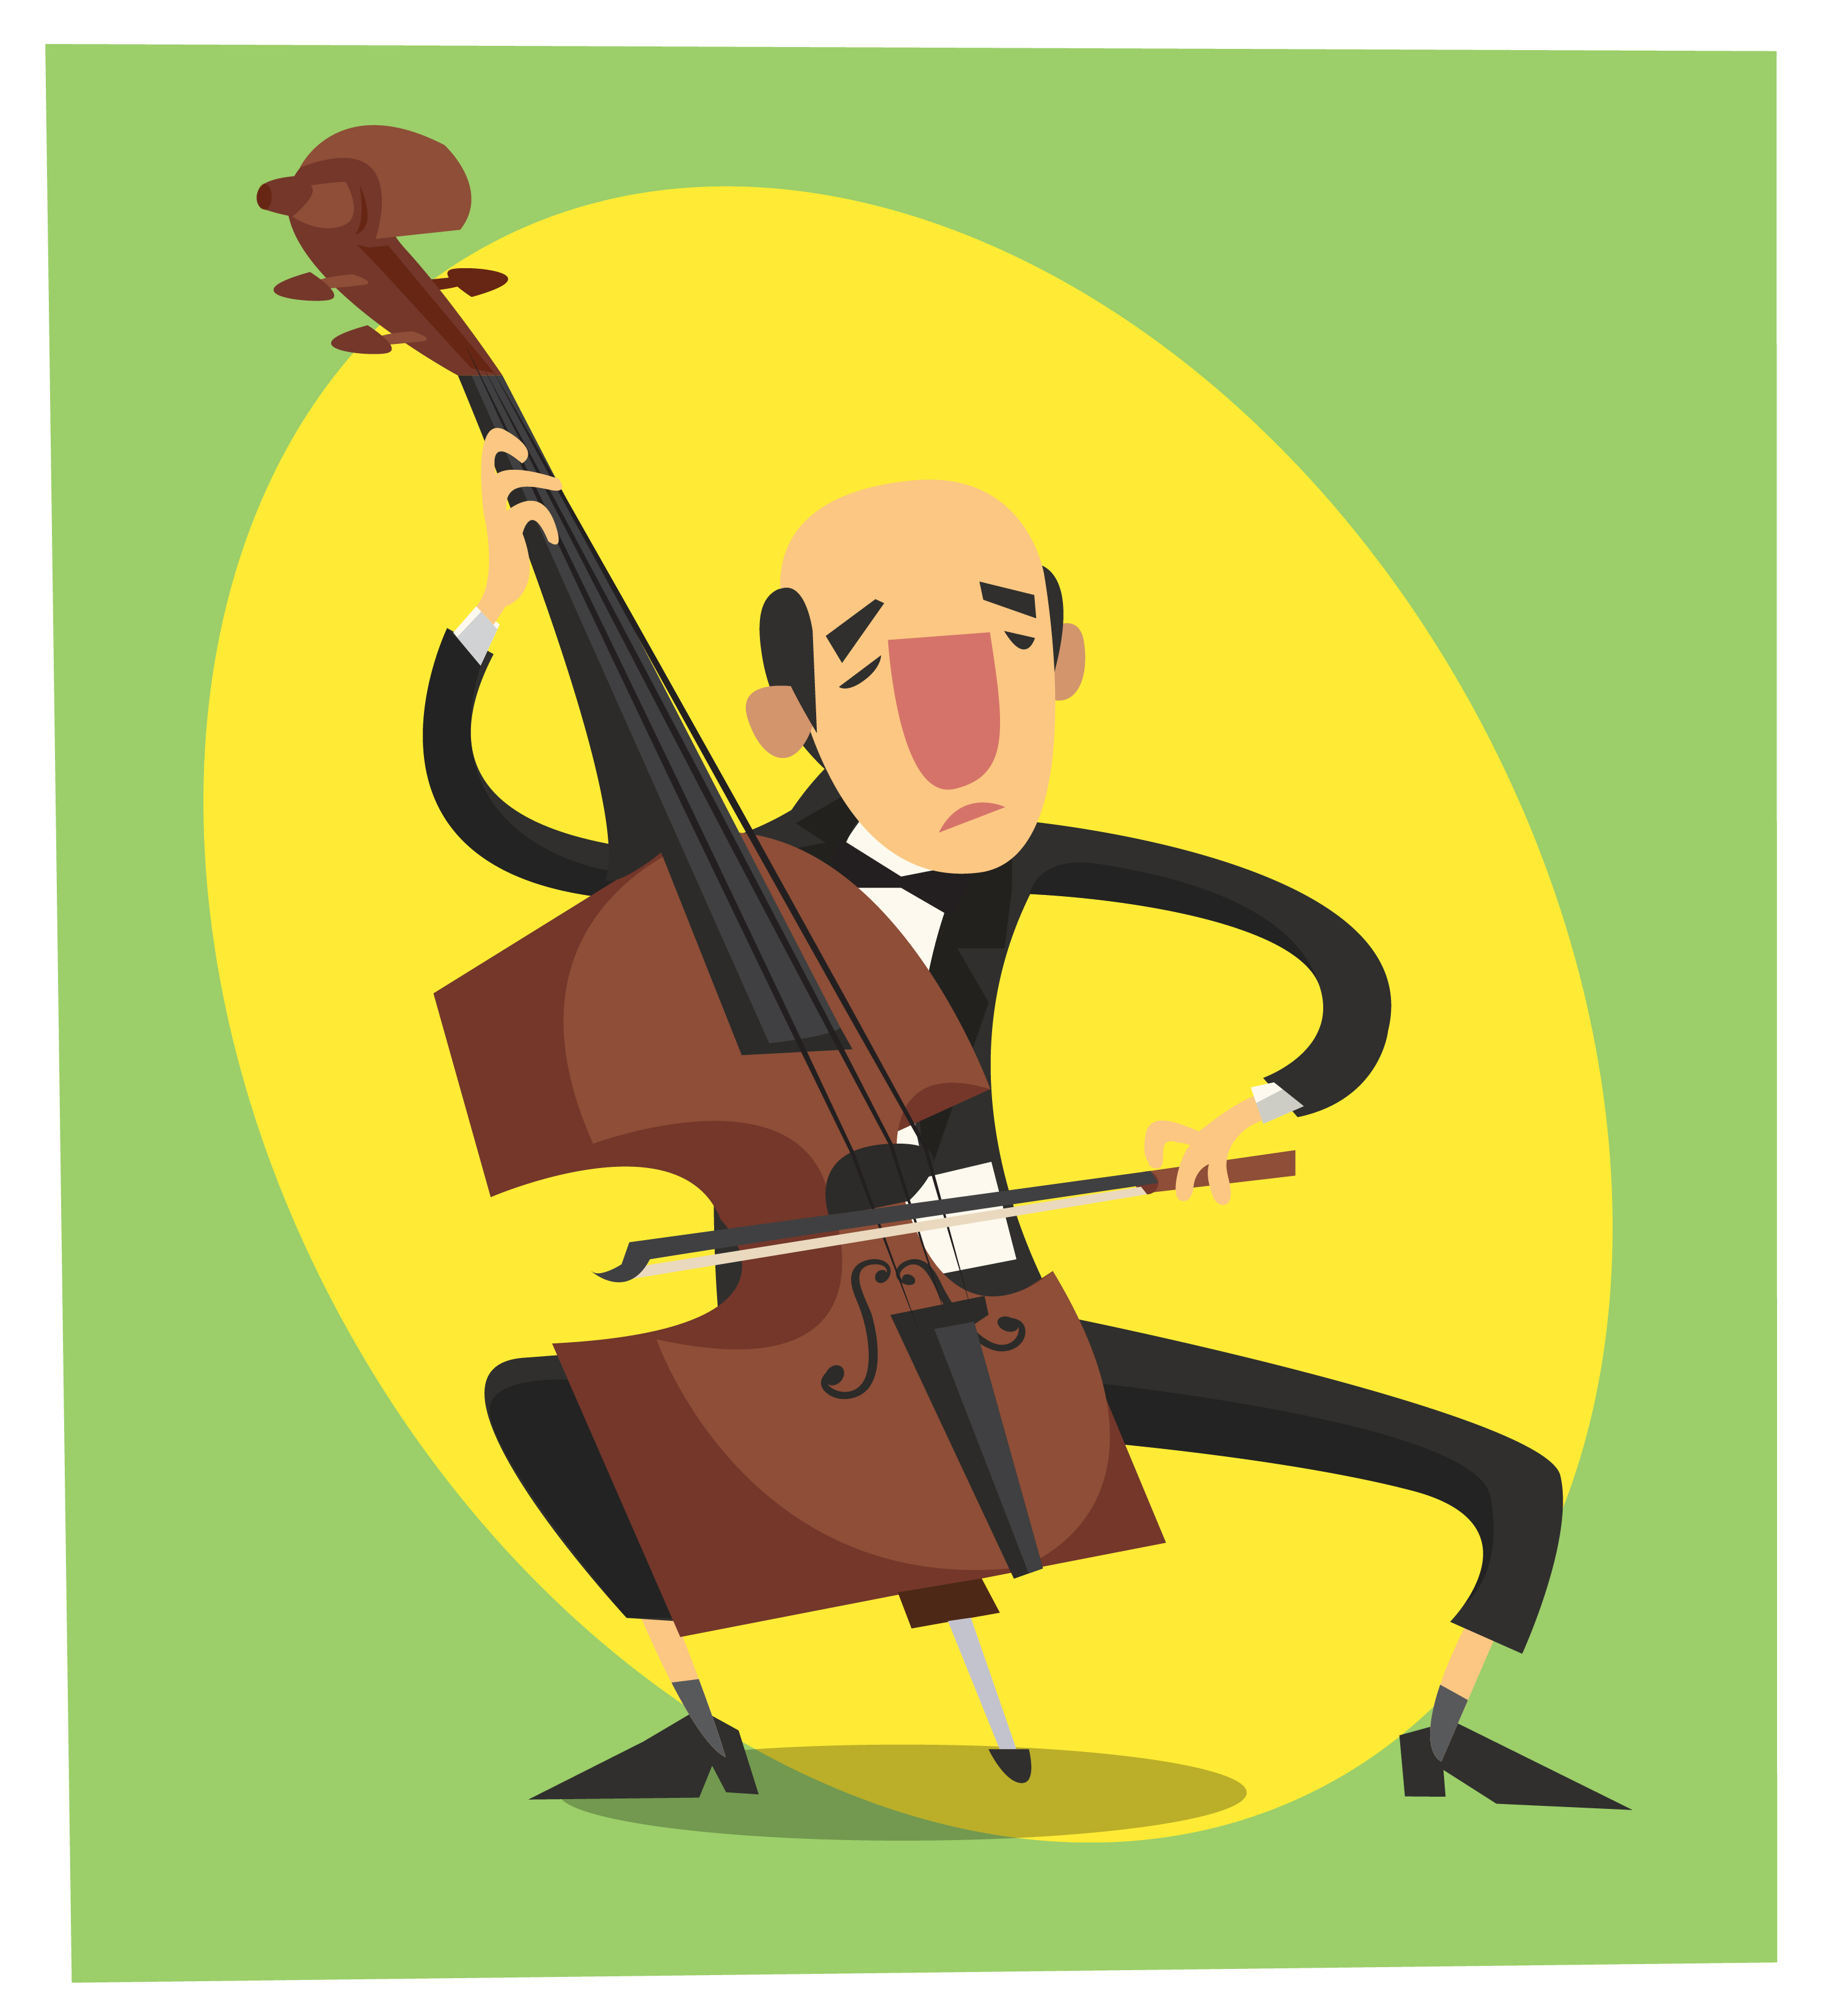 Music cartoon character vector illustration for design Photoshop brush